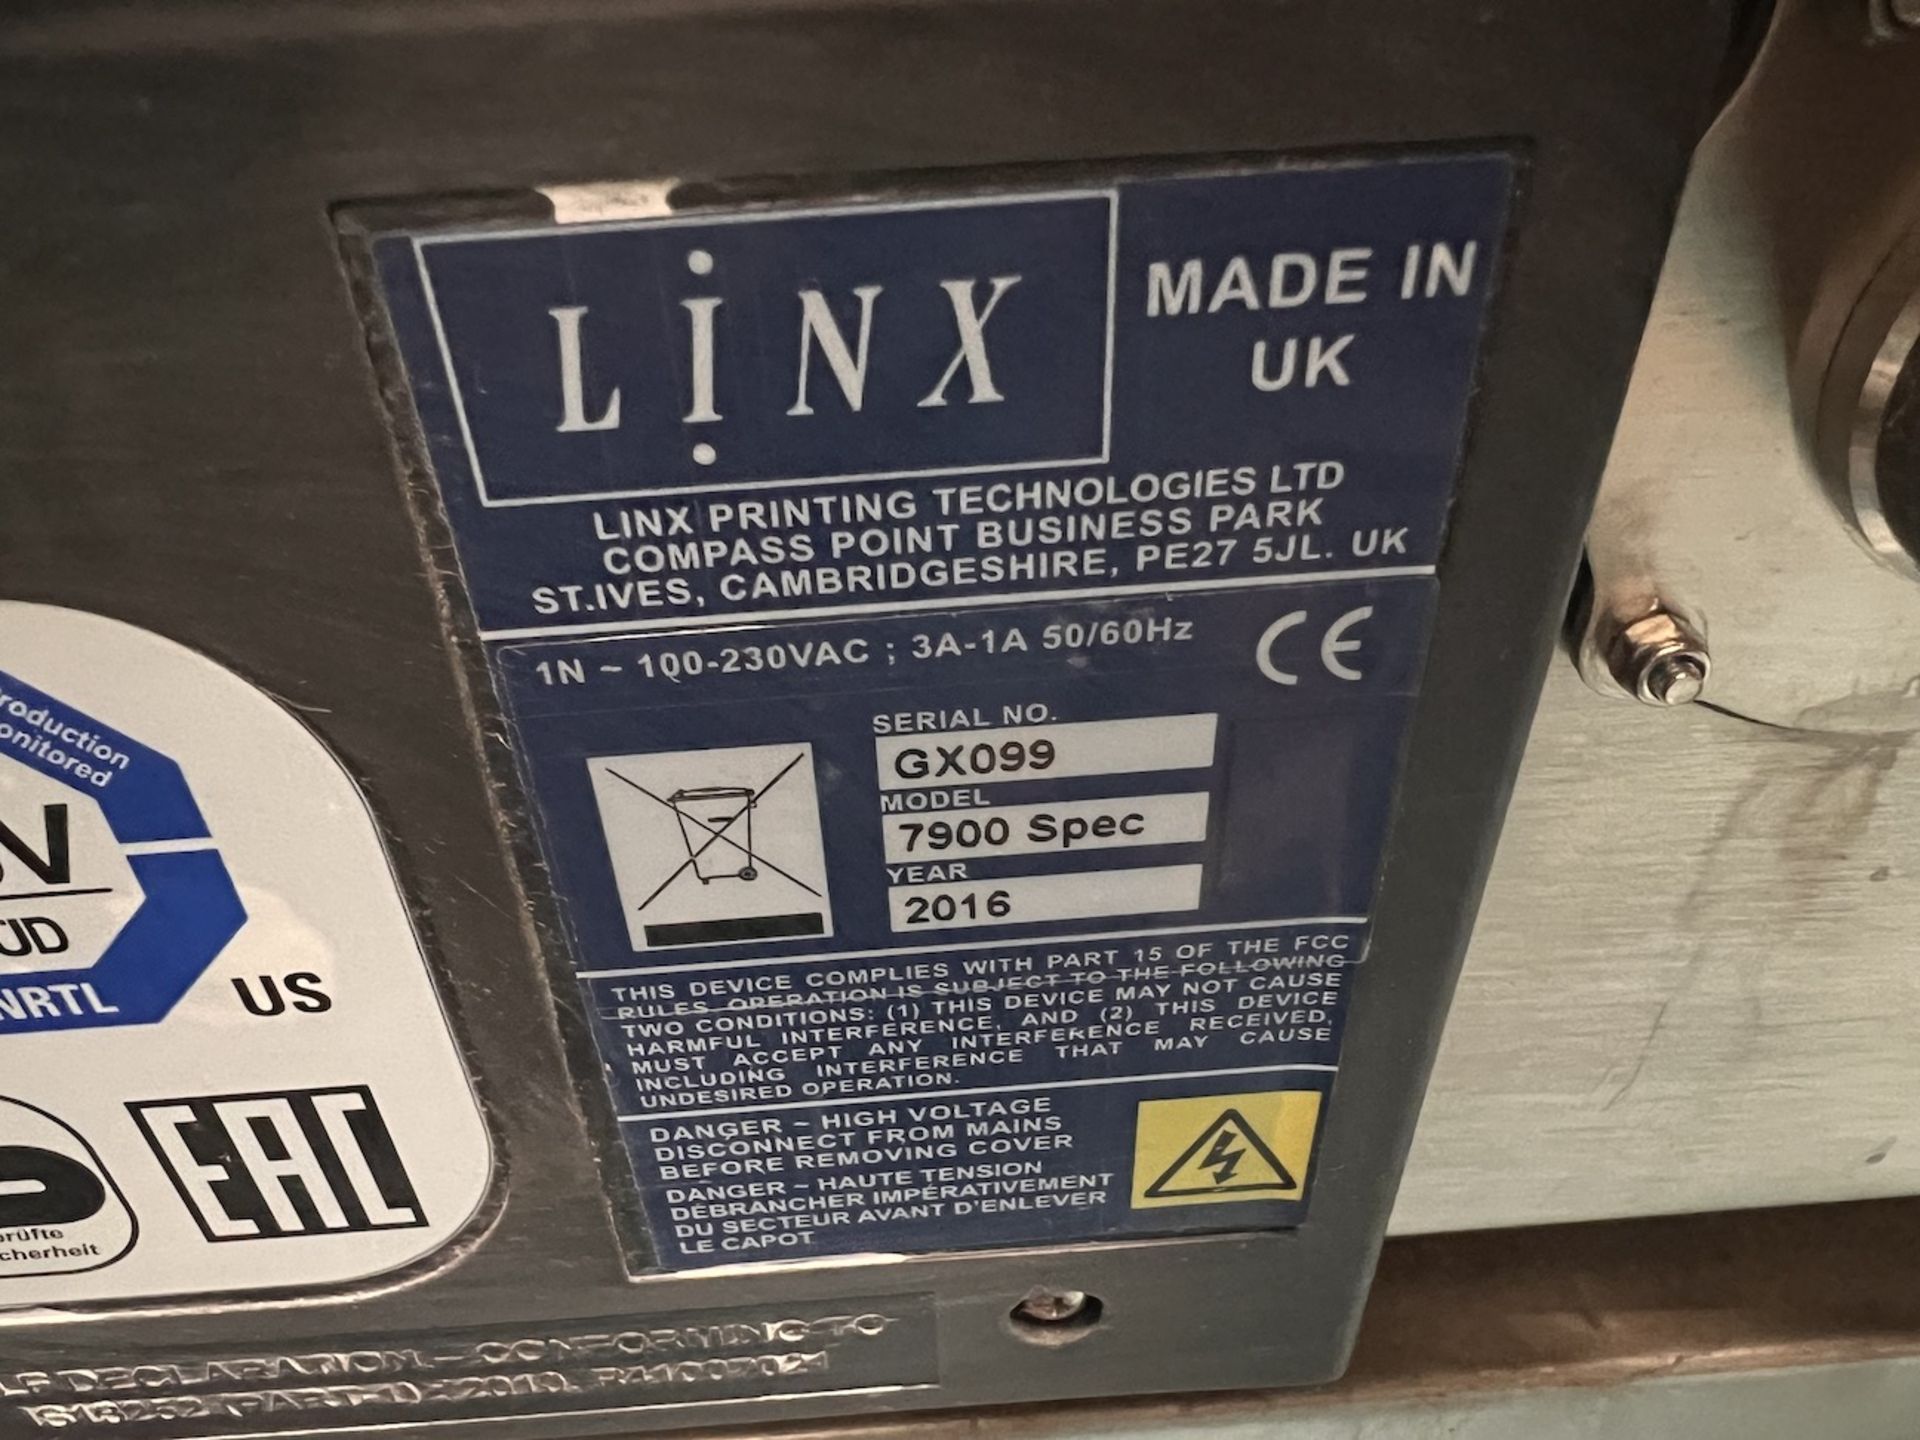 2016 LINX SINGLE HEAD DATE CODER, MODEL 7900 SPEC, S/N GX099, 100-230 VAC, 50-60 HZ - Image 5 of 8